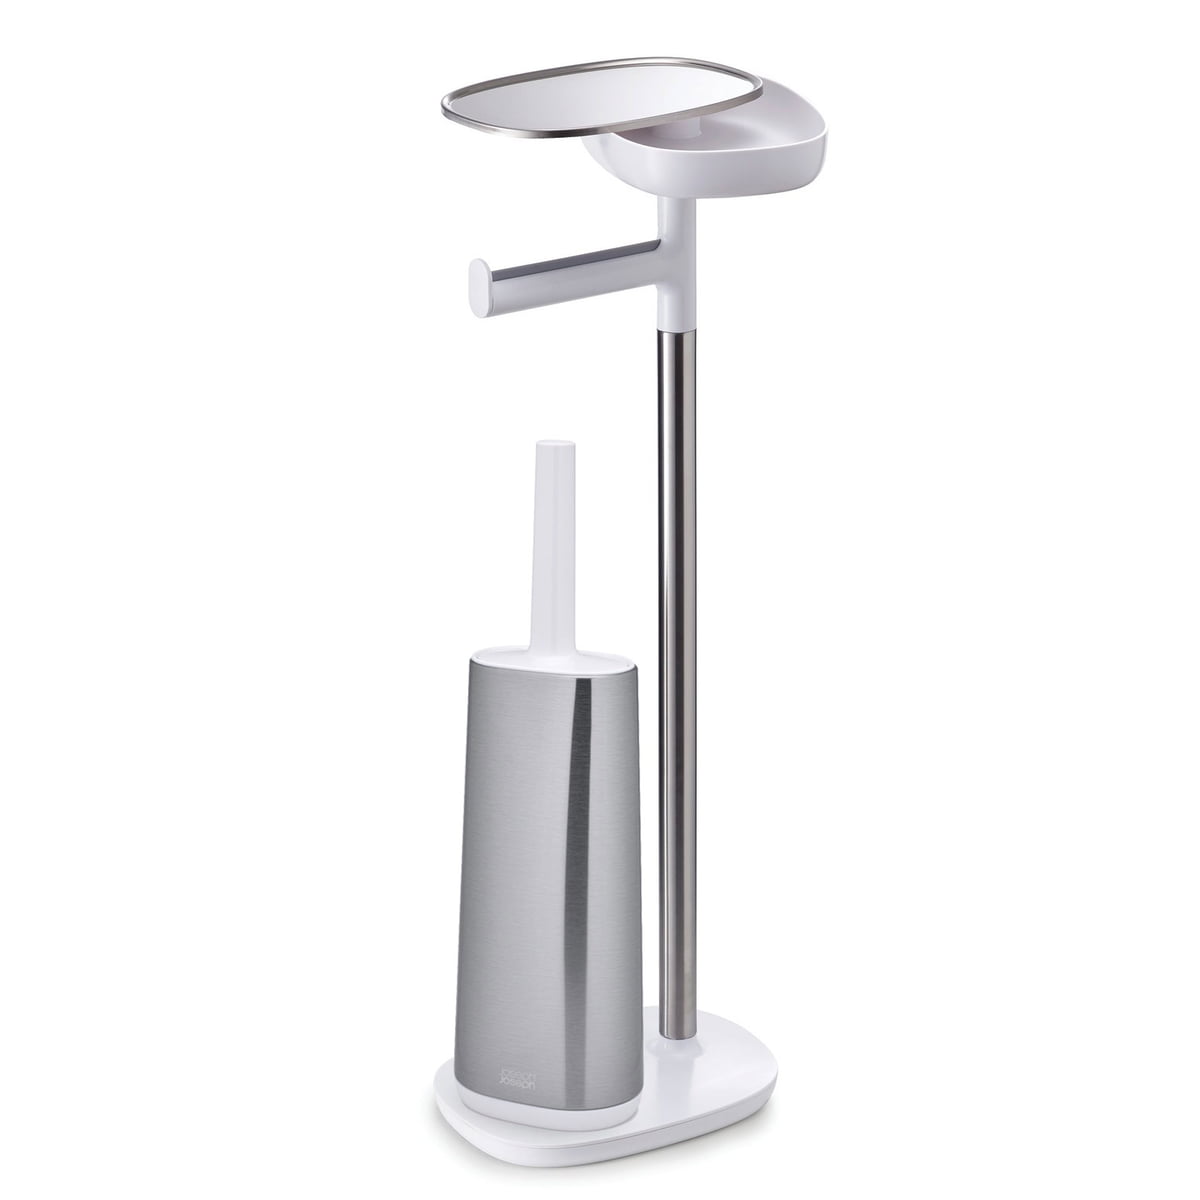 https://cdn.connox.com/m/100030/237906/media/joseph-joseph/Easy-Store-Halter/Joseph-Joseph-EasyStore-Plus-Toilettenpapierhalter-mit-Flex-Steel-Toilettenbuerste-Edelstahl-weiss-frei.jpg